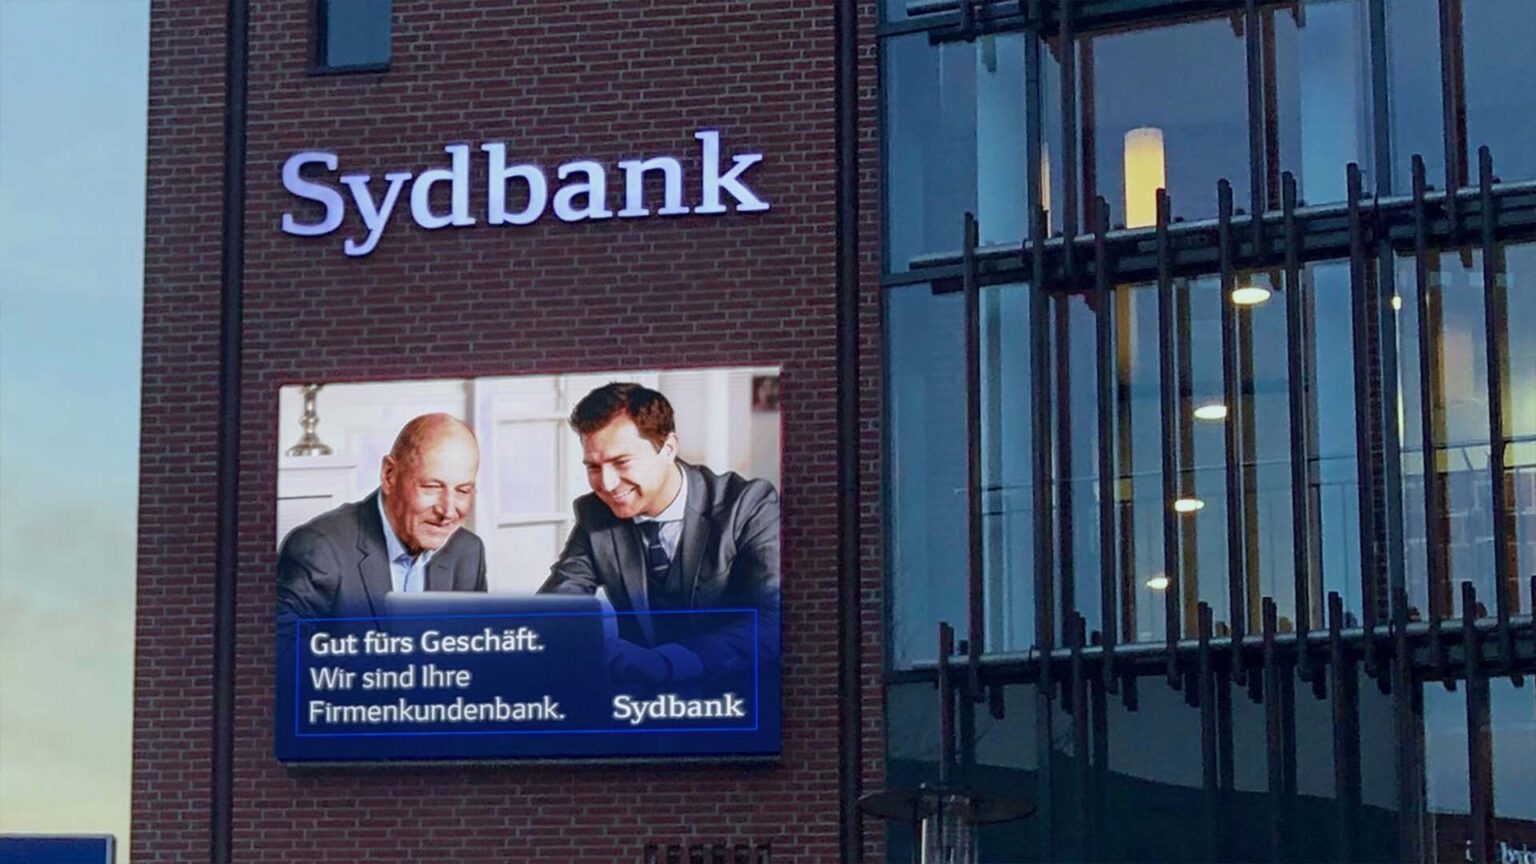 ViewNet-LED-Großbildschirme-Fassadenbildschirm-Sydbank-Flensburg